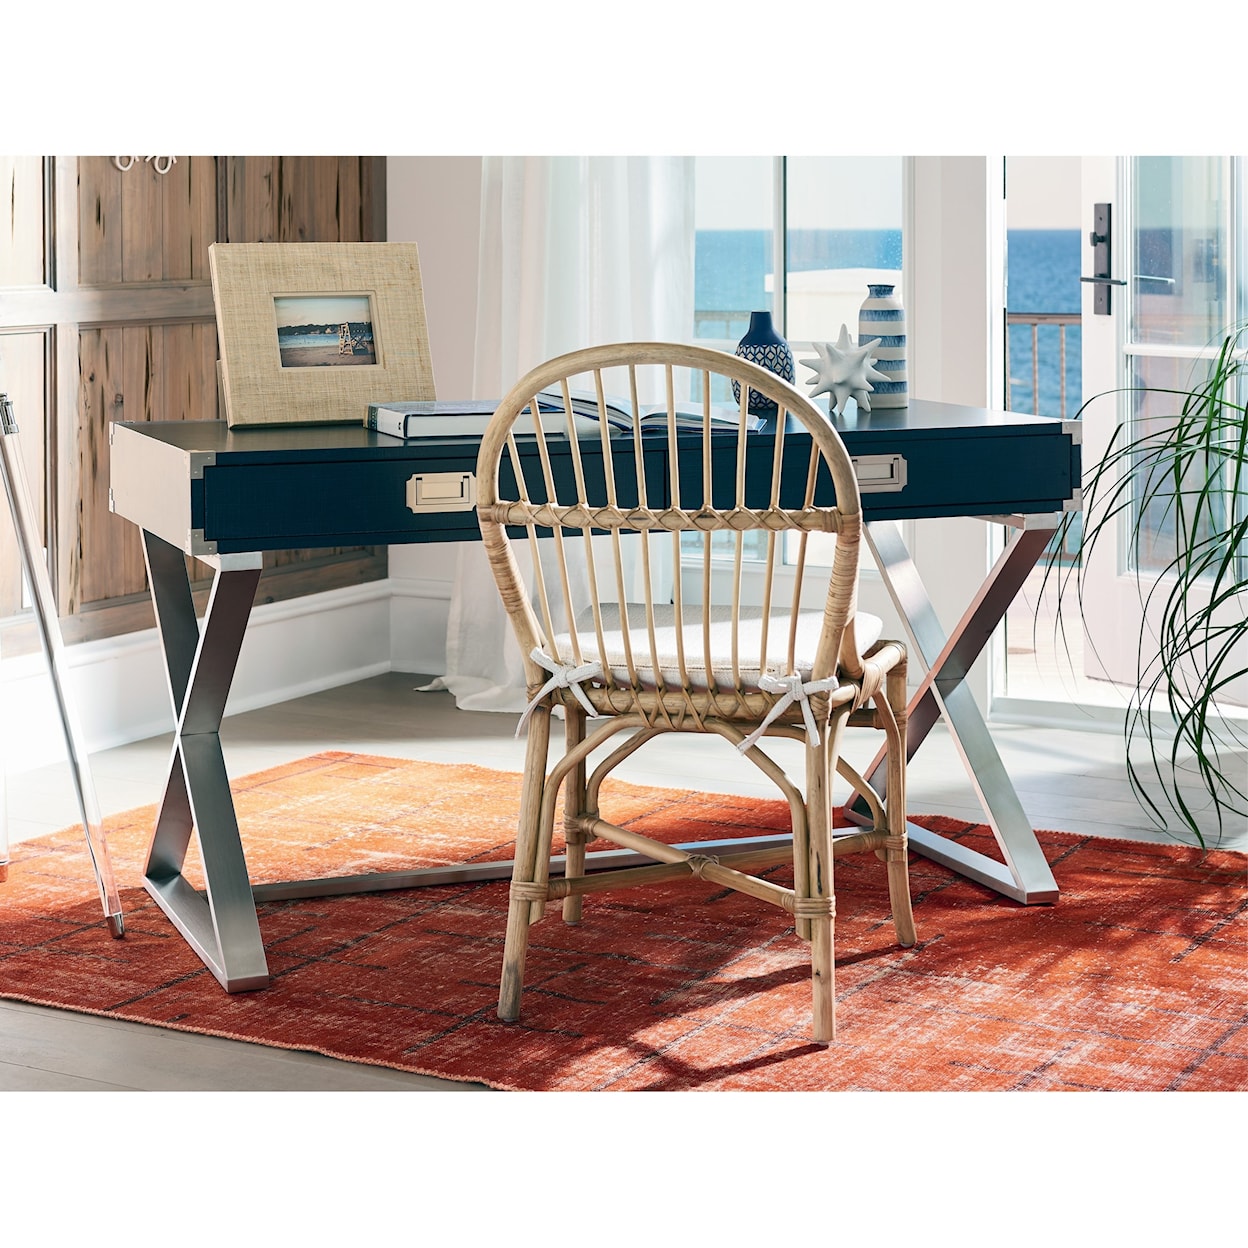 Universal Coastal Living Home - Escape Sanibel Side chair